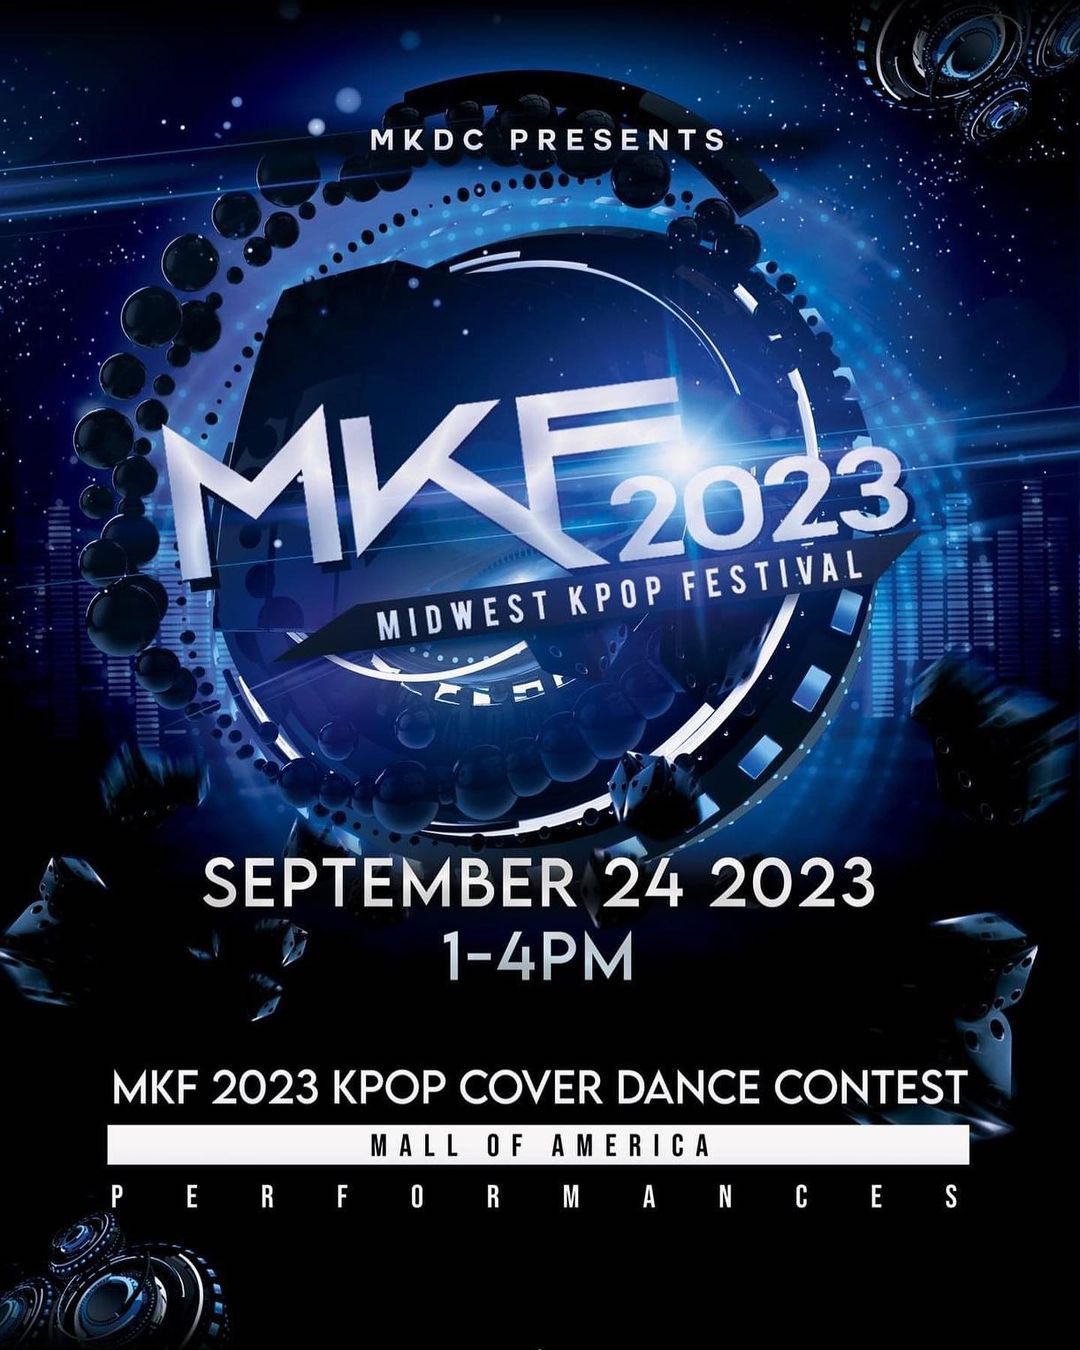 Midwest Kpop Festival Logo image.